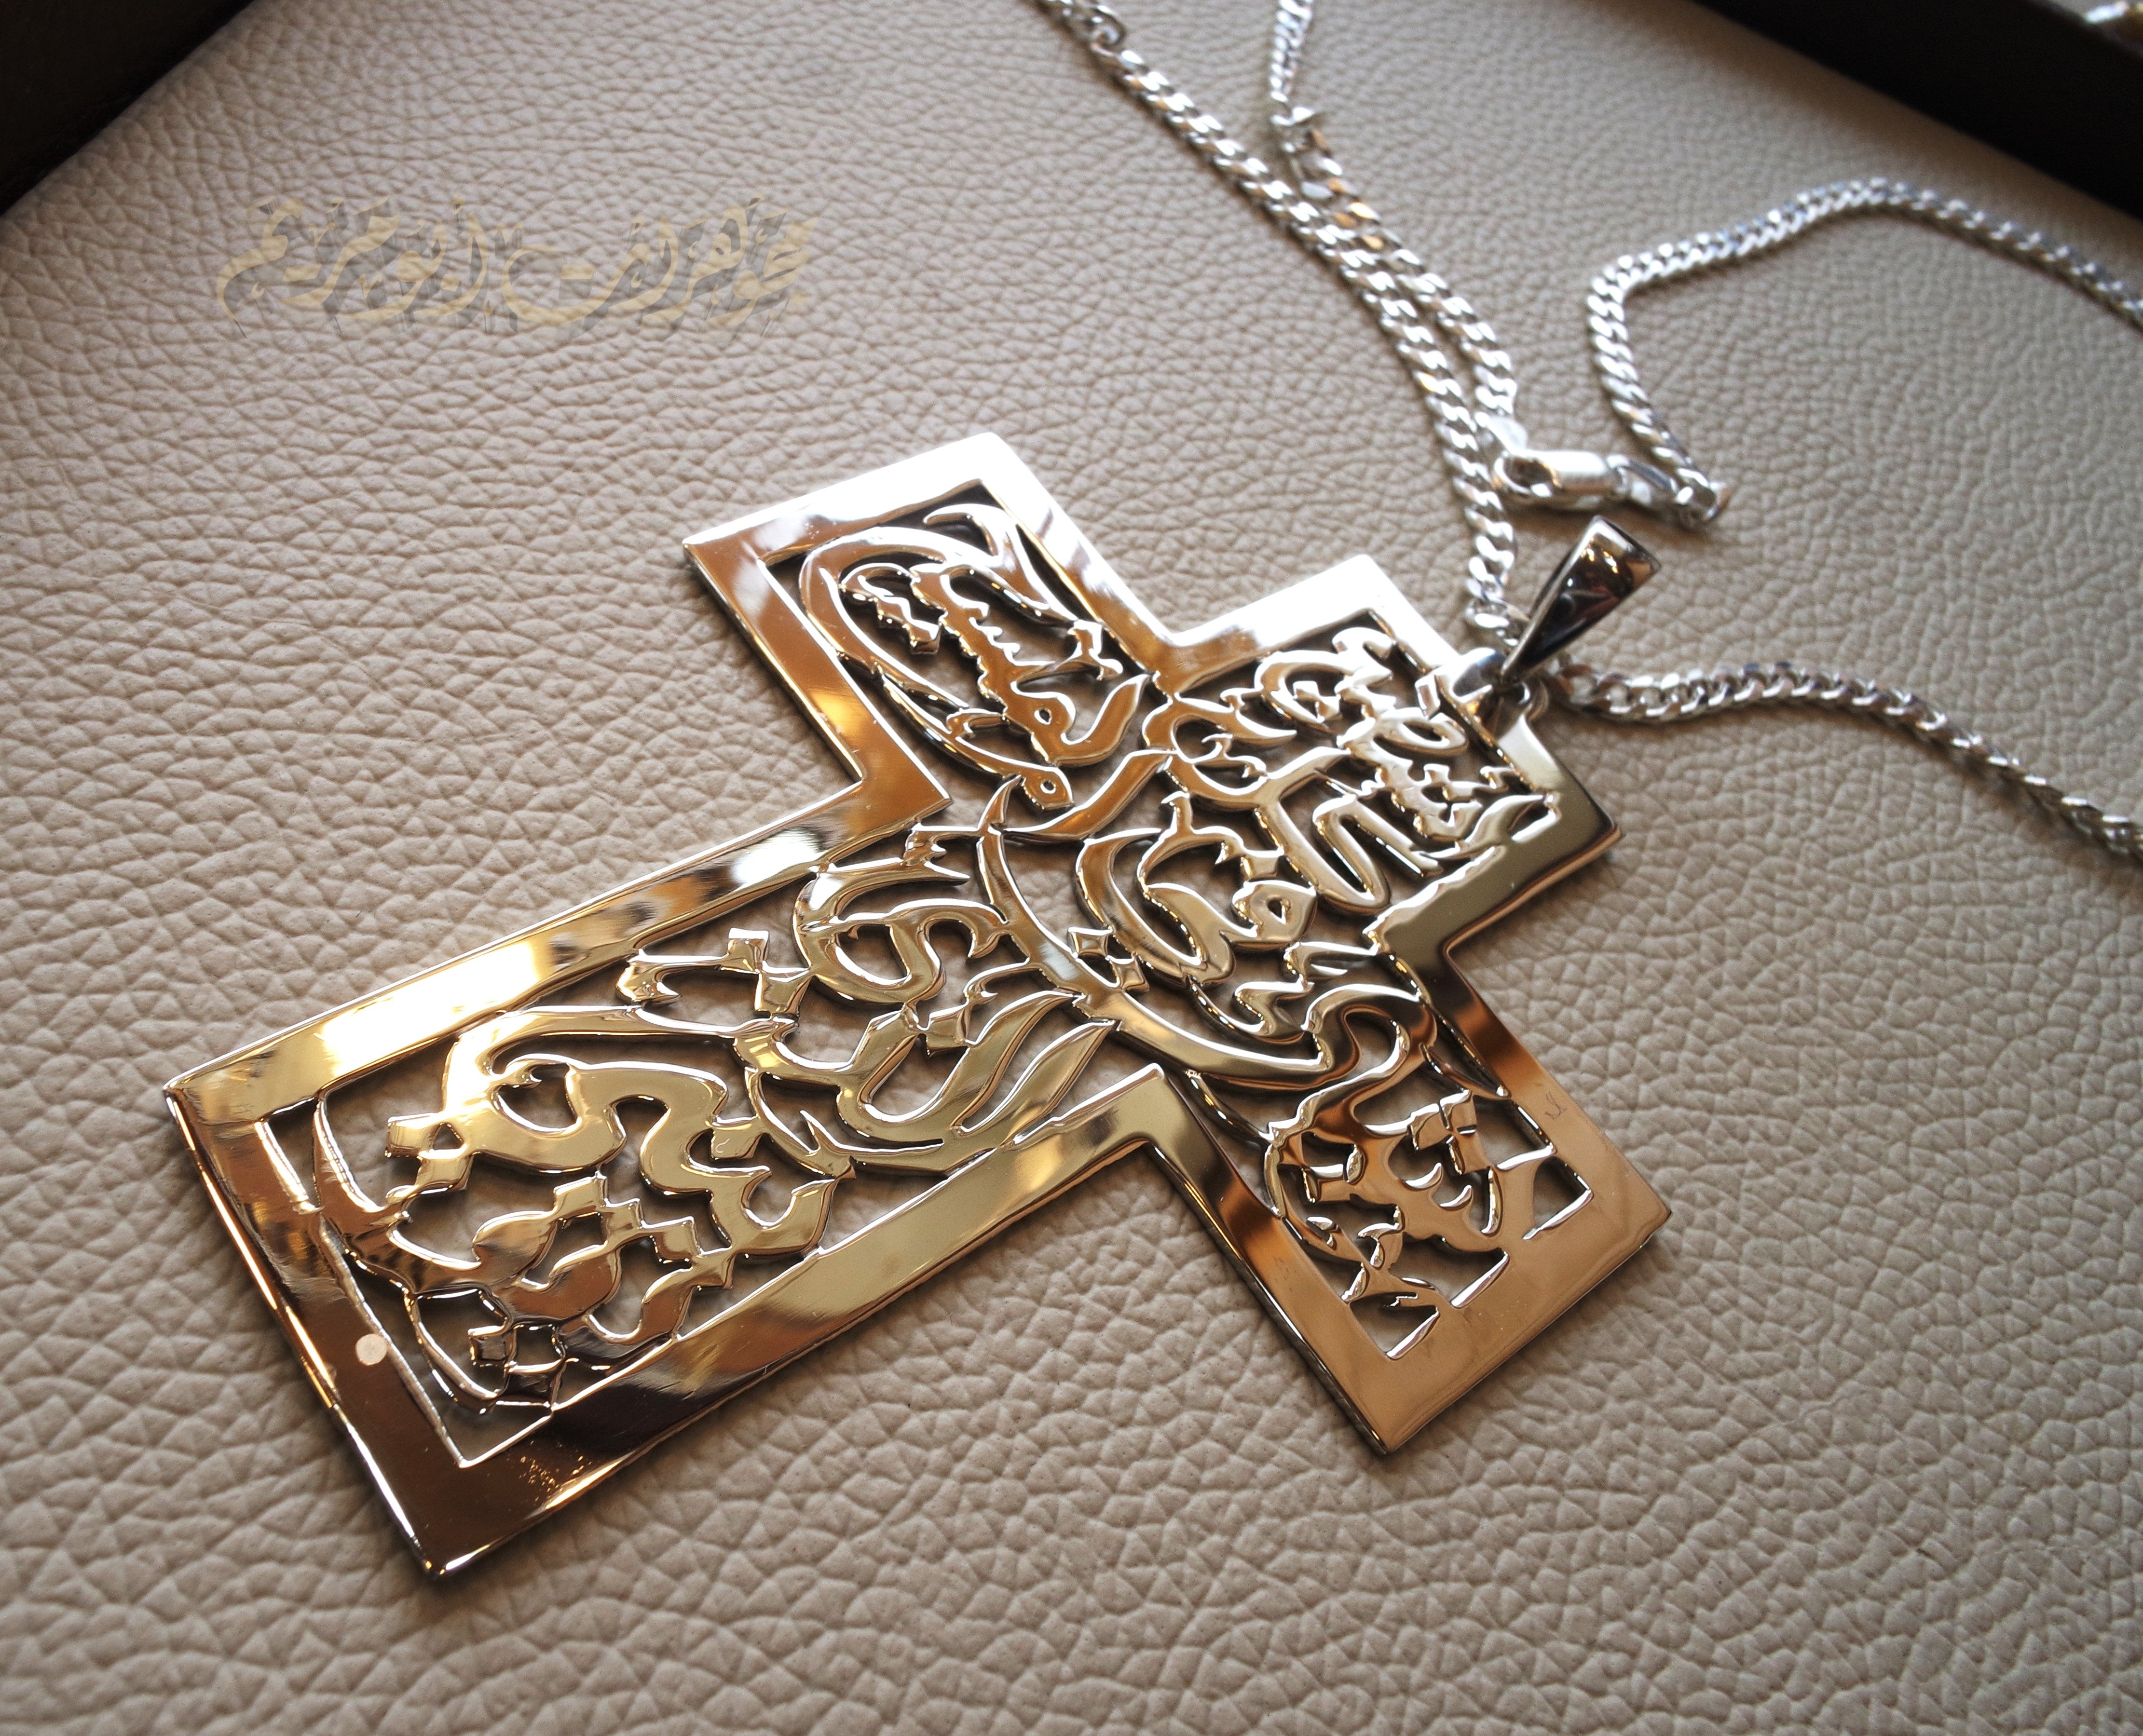 Men's Stainless steel Cross necklace,Black Cross,5mm Thick leather,Handmade  | eBay